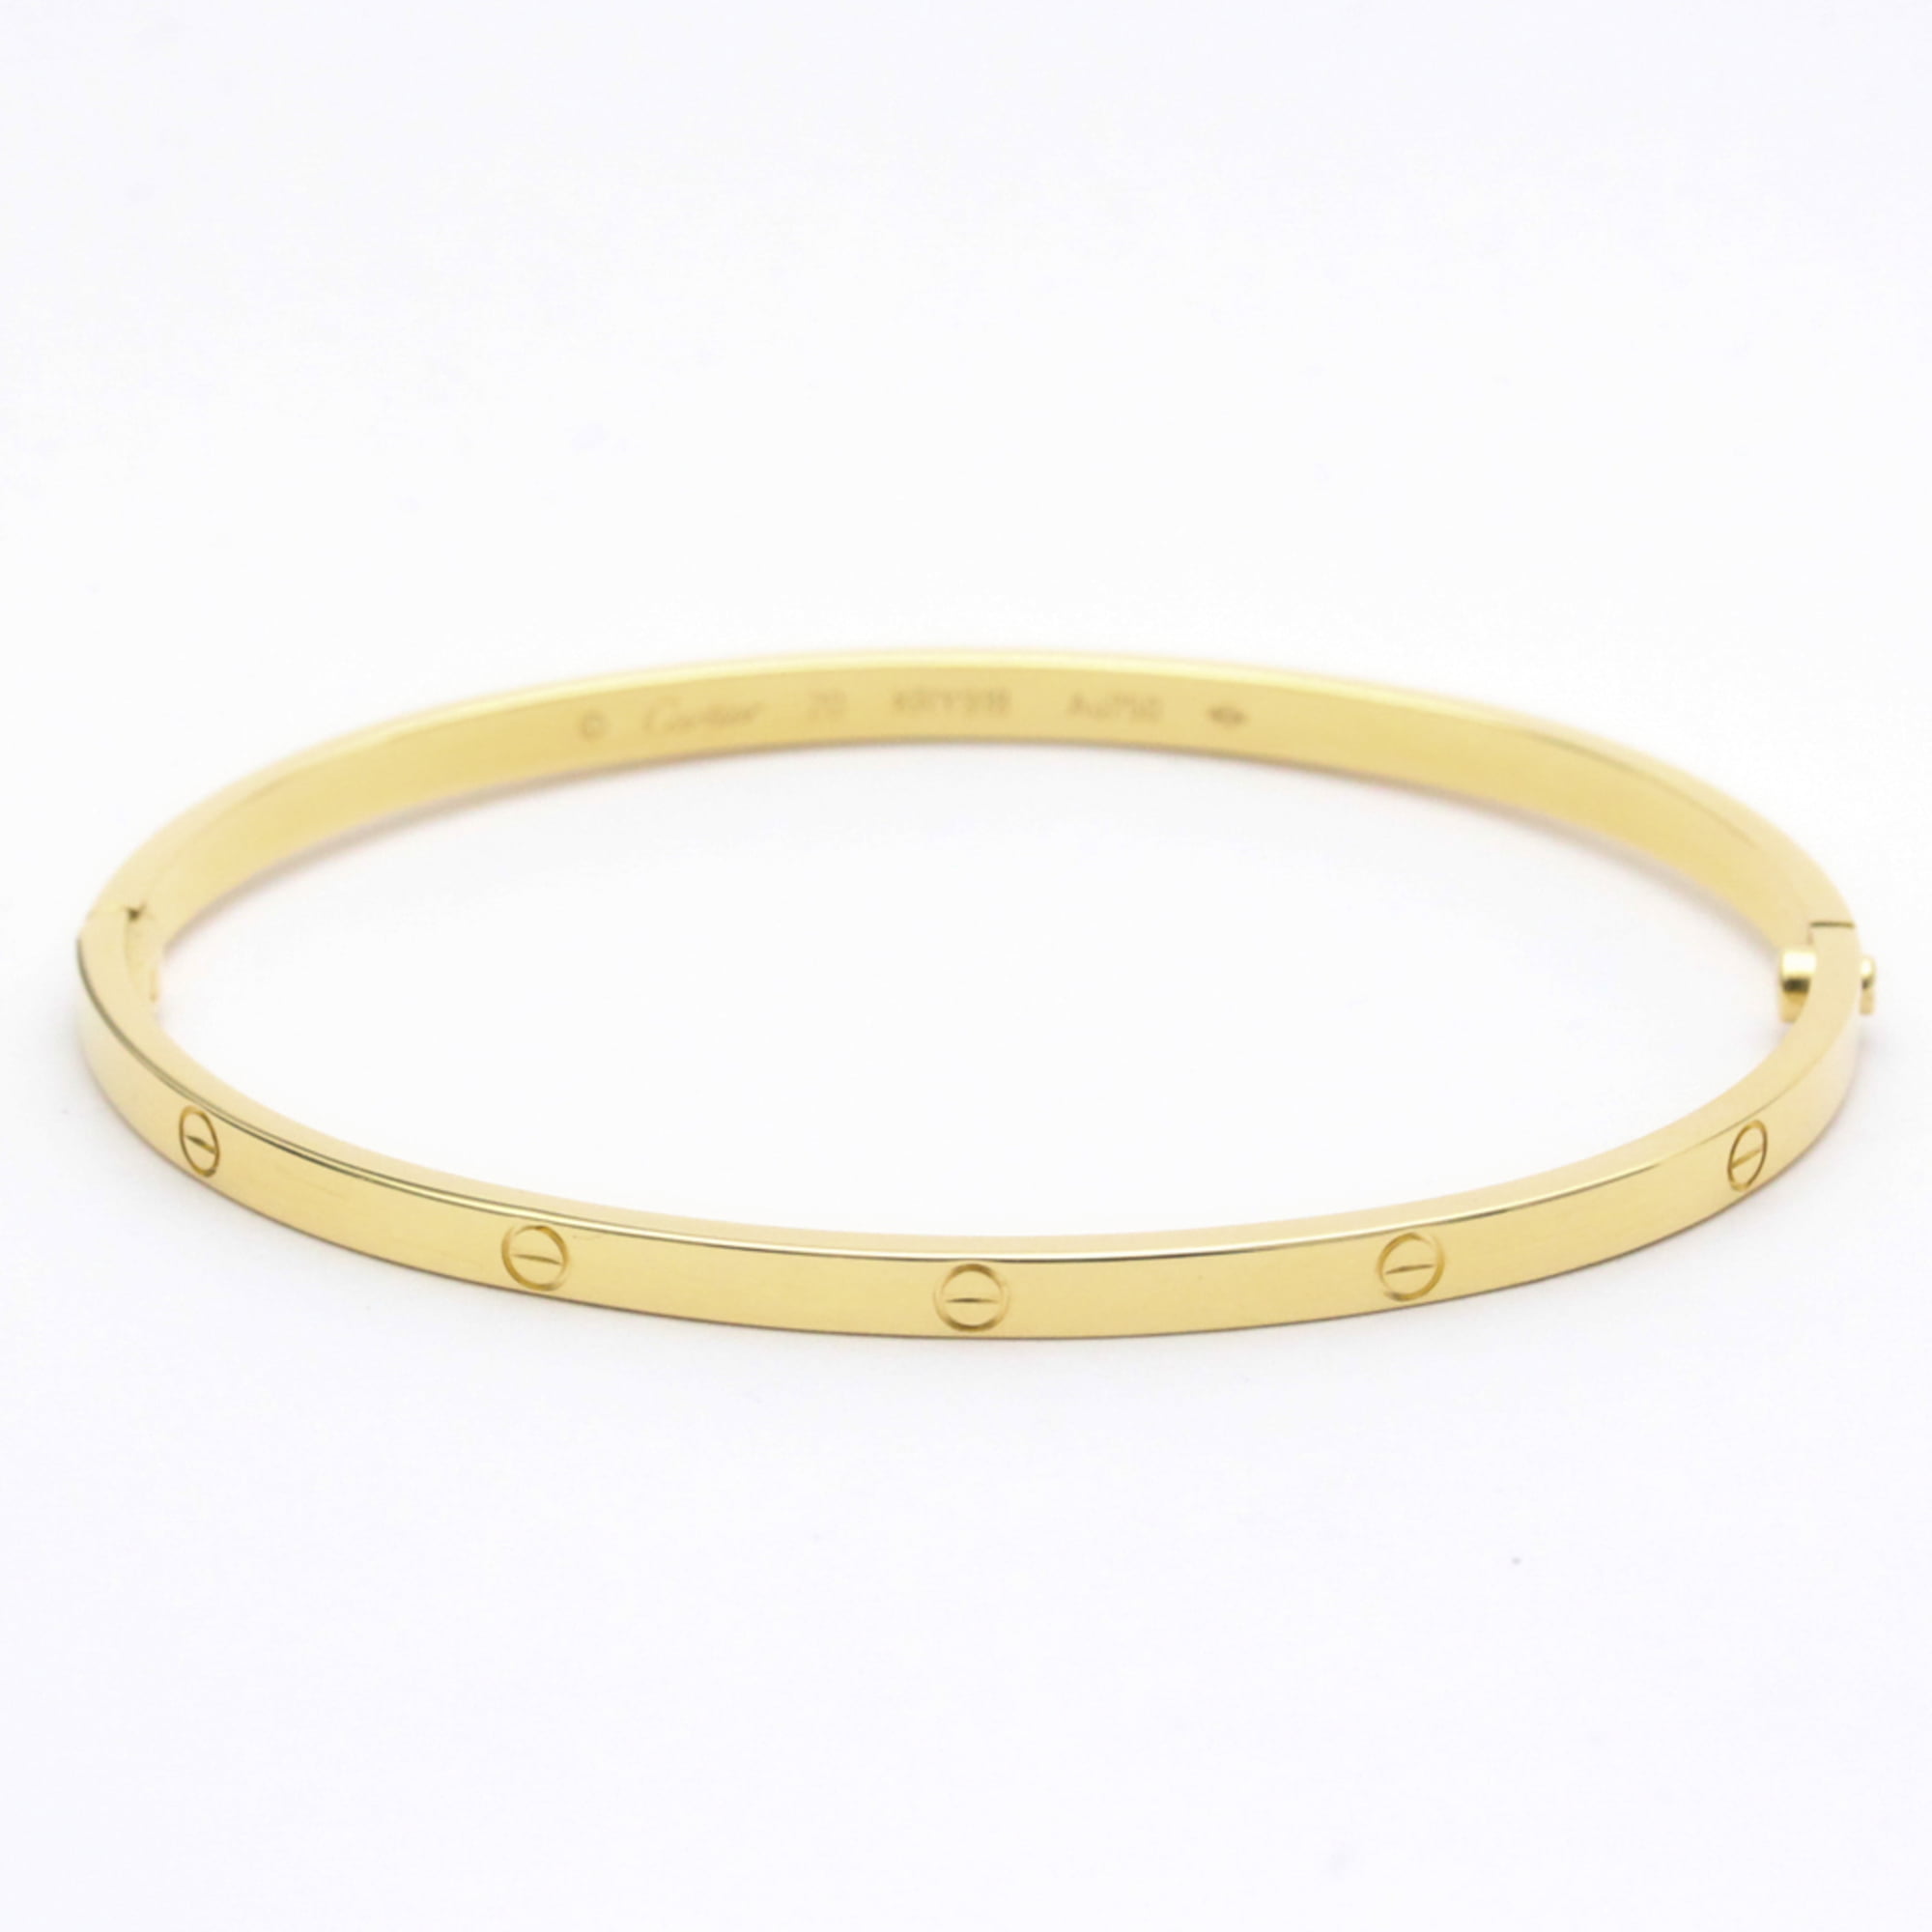 Buy [CARTIER] Cartier Love Bracelet K18 Yellow Gold Women's Bracelet [used]  A rank from Japan - Buy authentic Plus exclusive items from Japan | ZenPlus